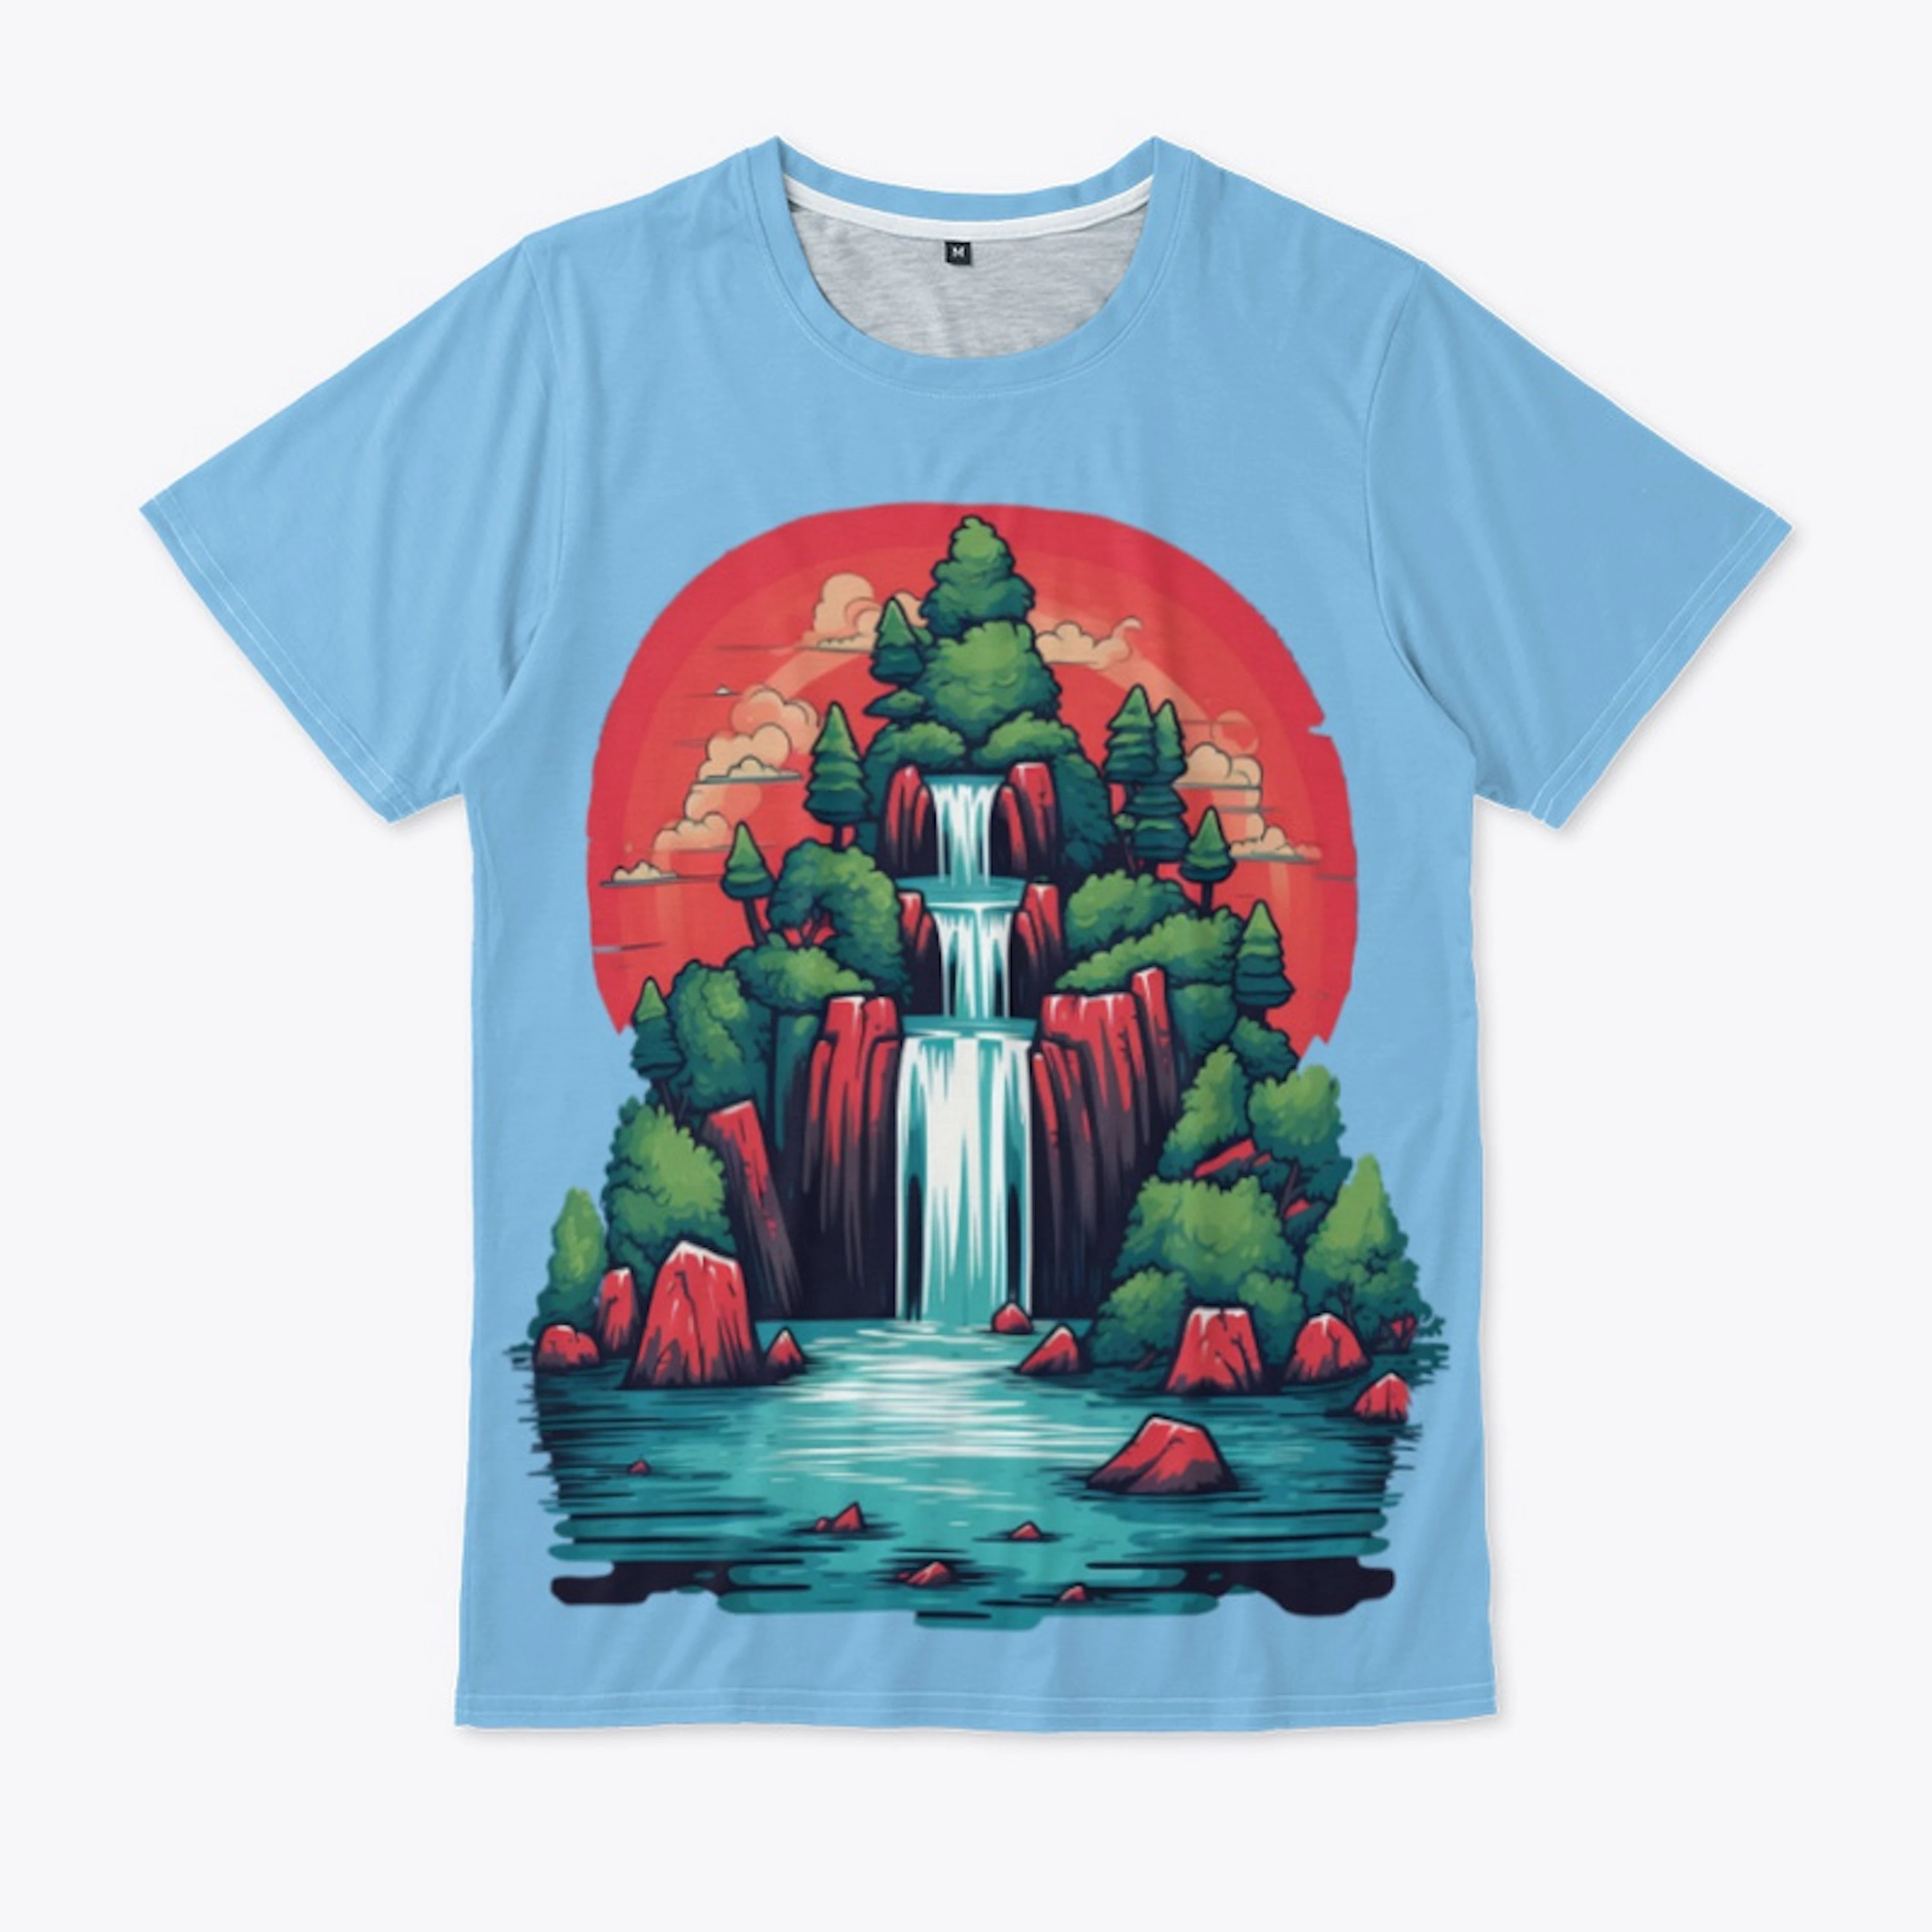 Calming Waterfall